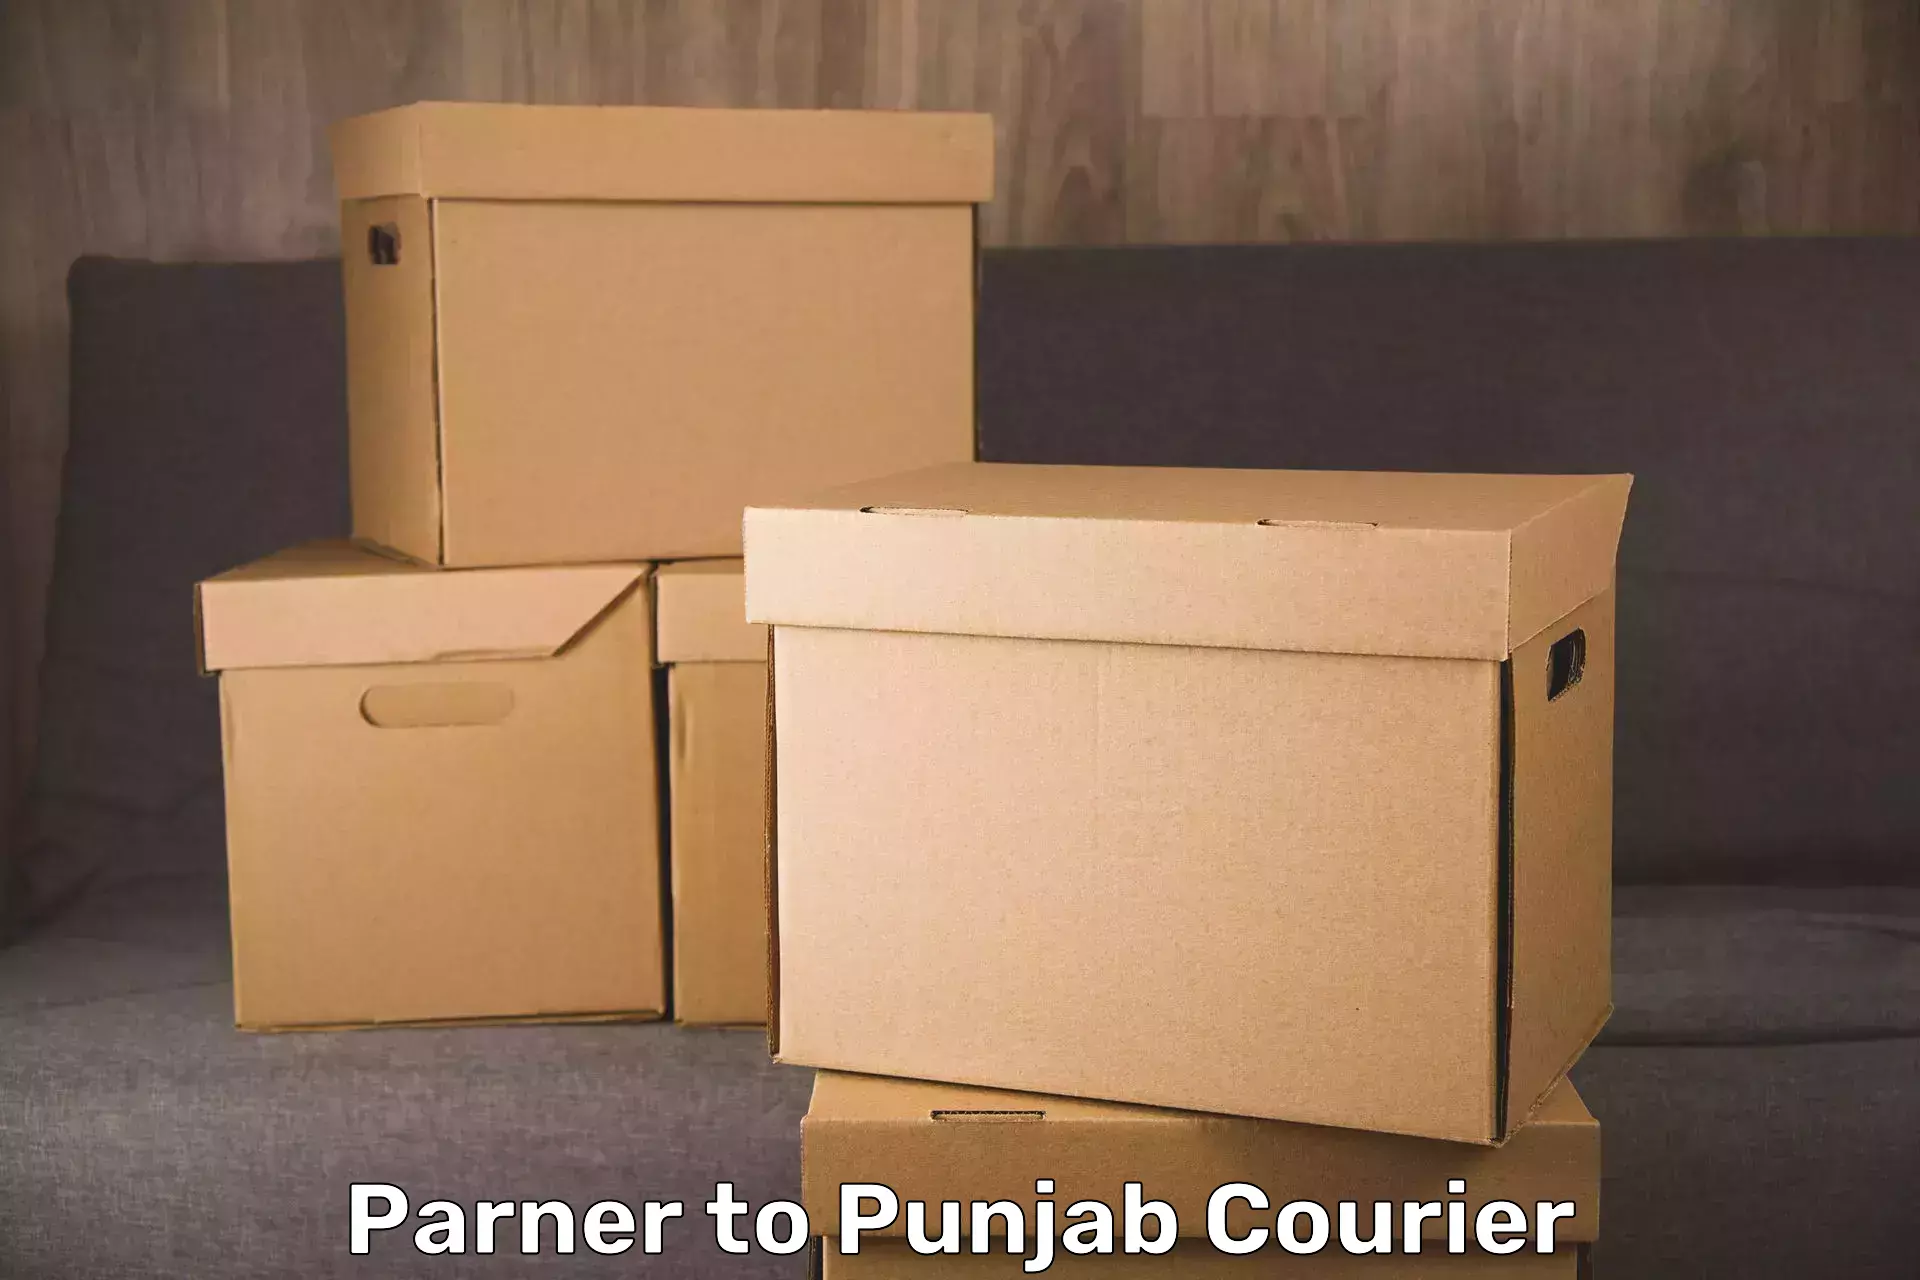 Urgent luggage shipment Parner to Punjab